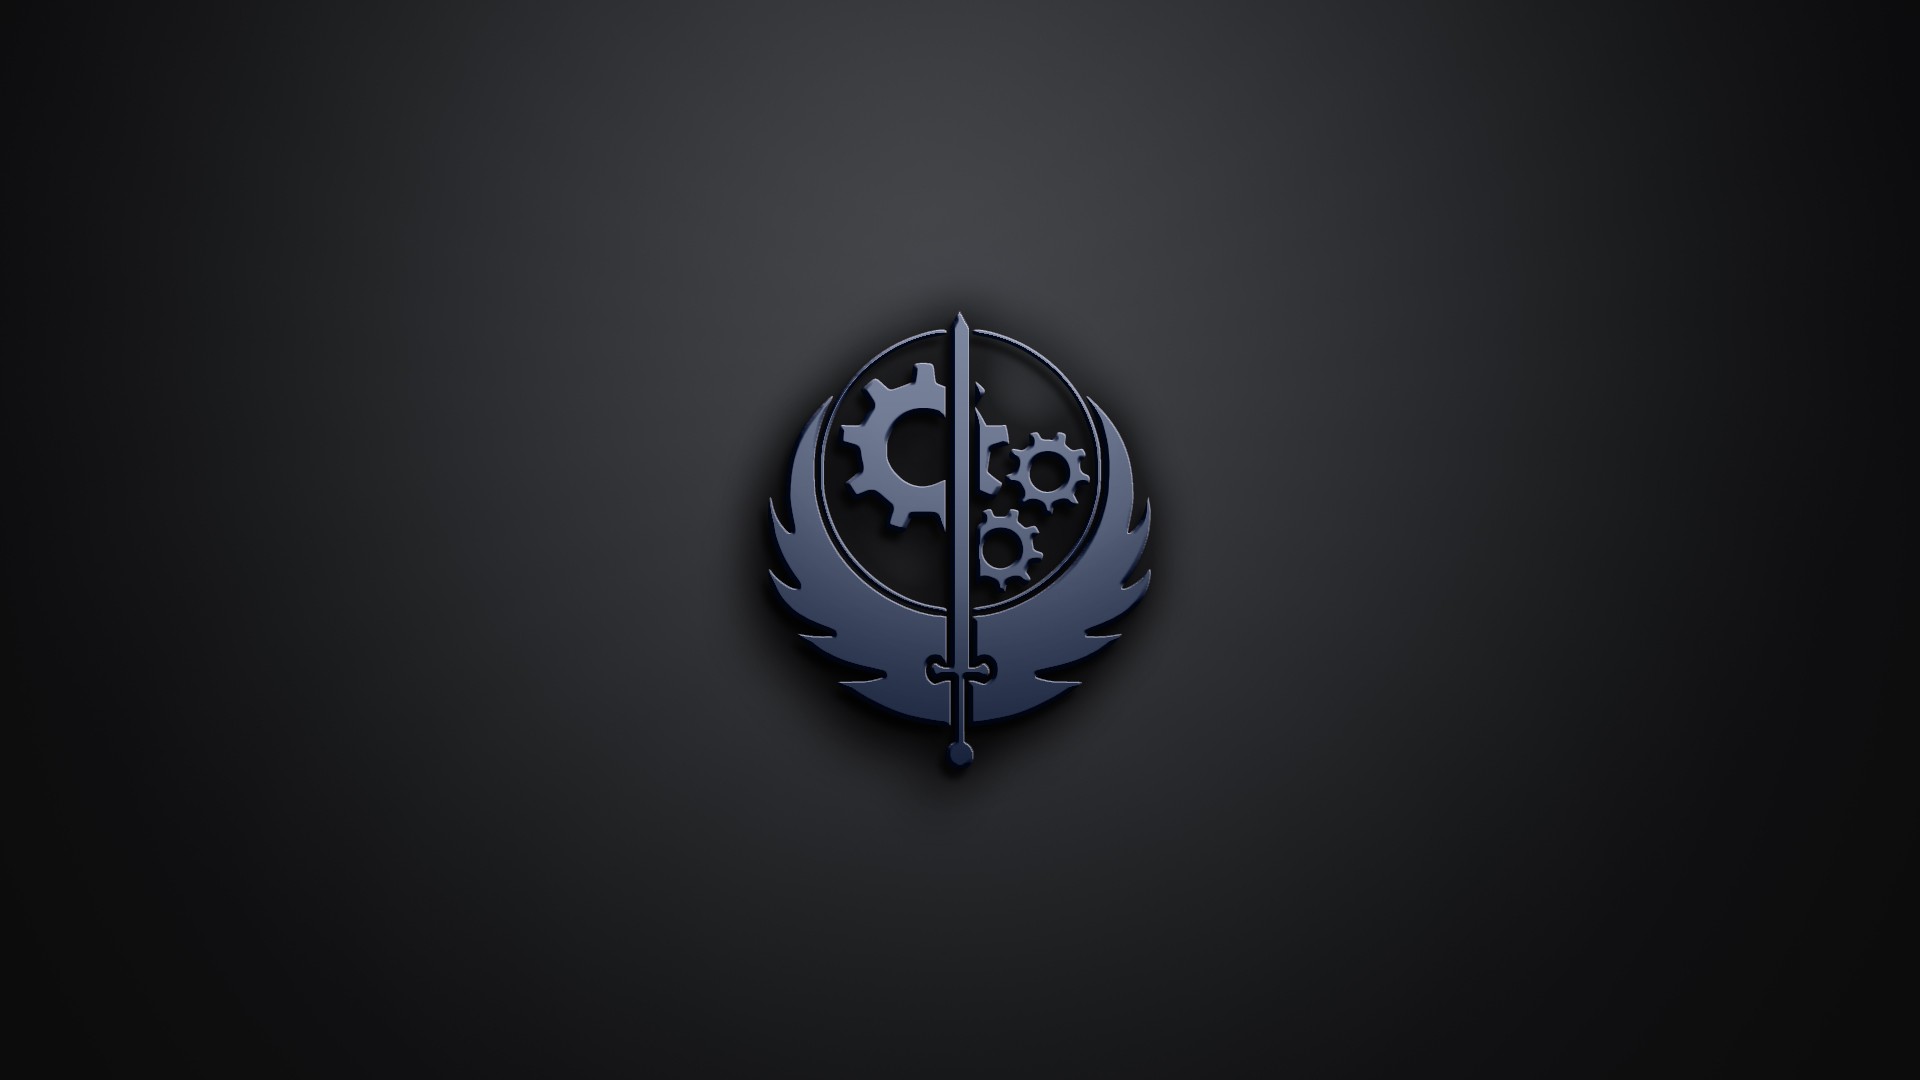 General 1920x1080 video games Fallout minimalism simple background gears sword video game art Brotherhood of Steel logo